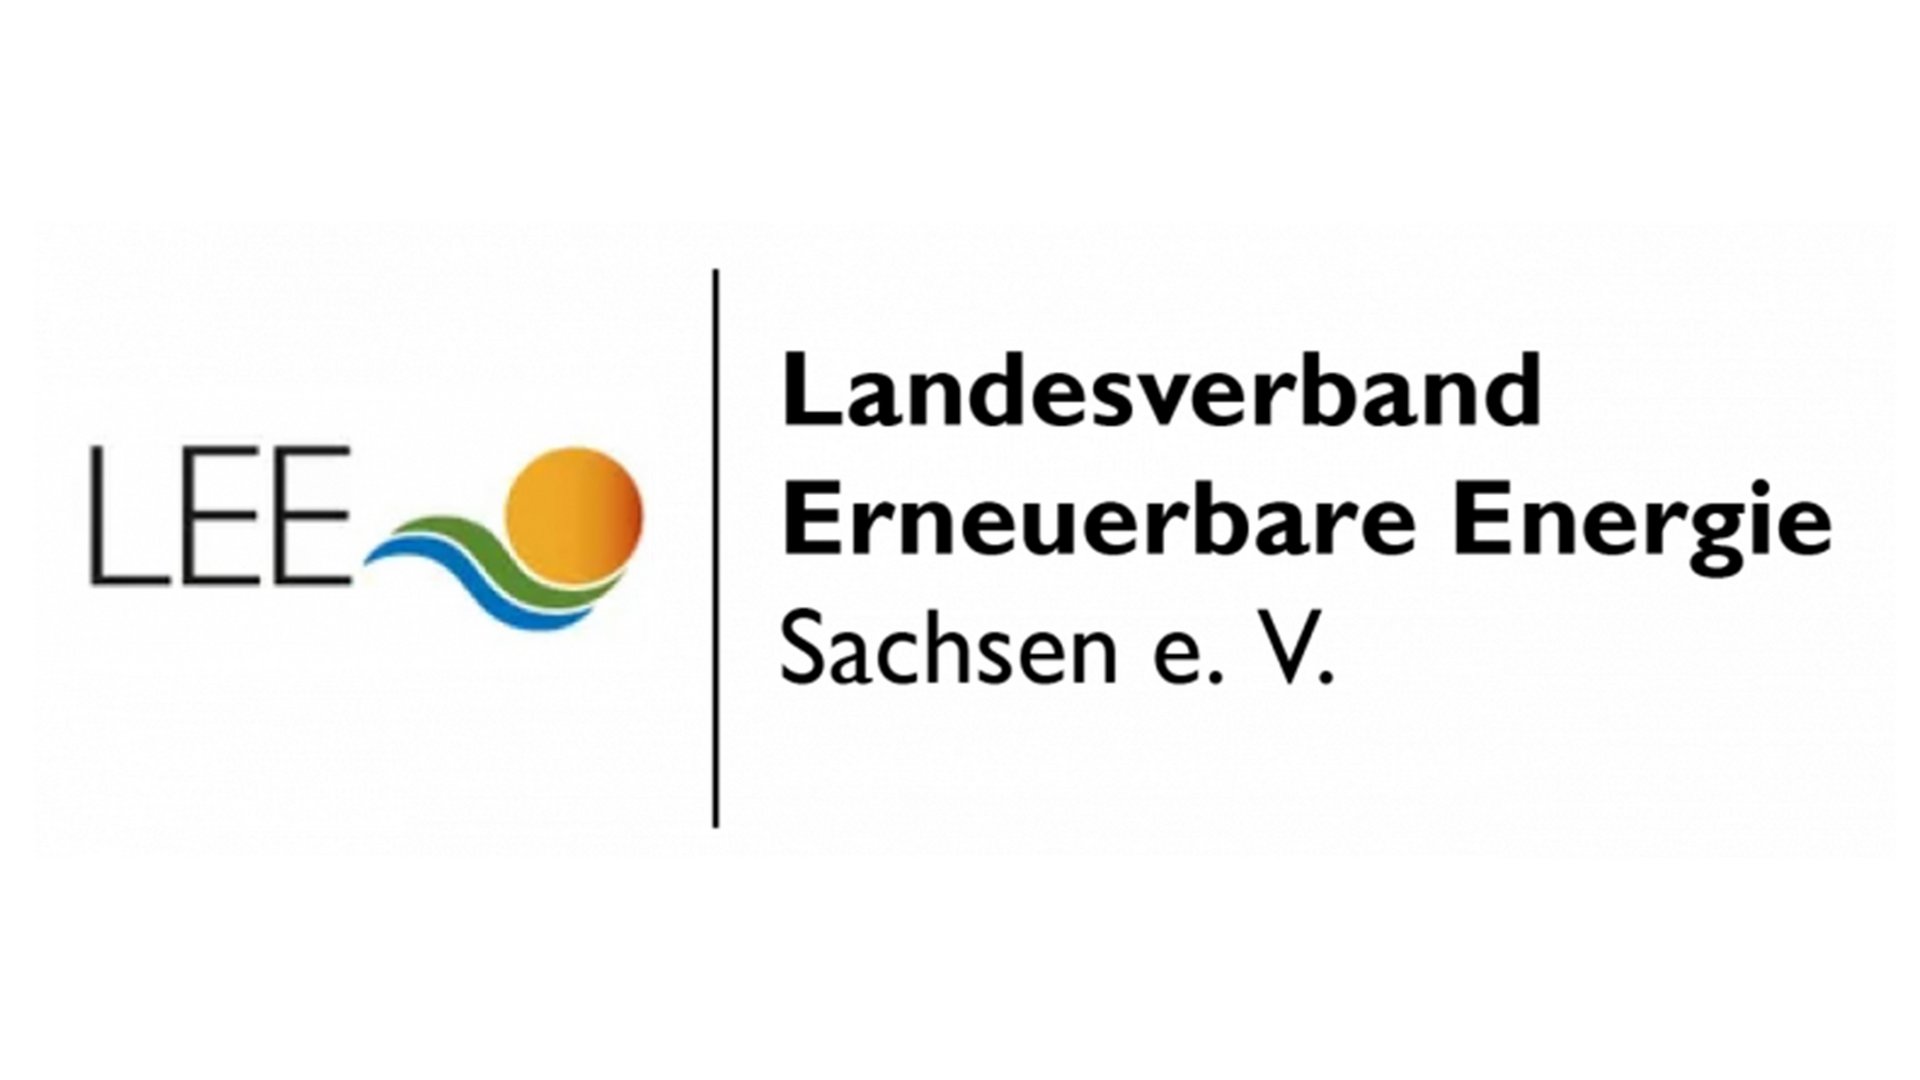 LEE Landesverband Erneuerbare Energie Sachsen e.V. Logo